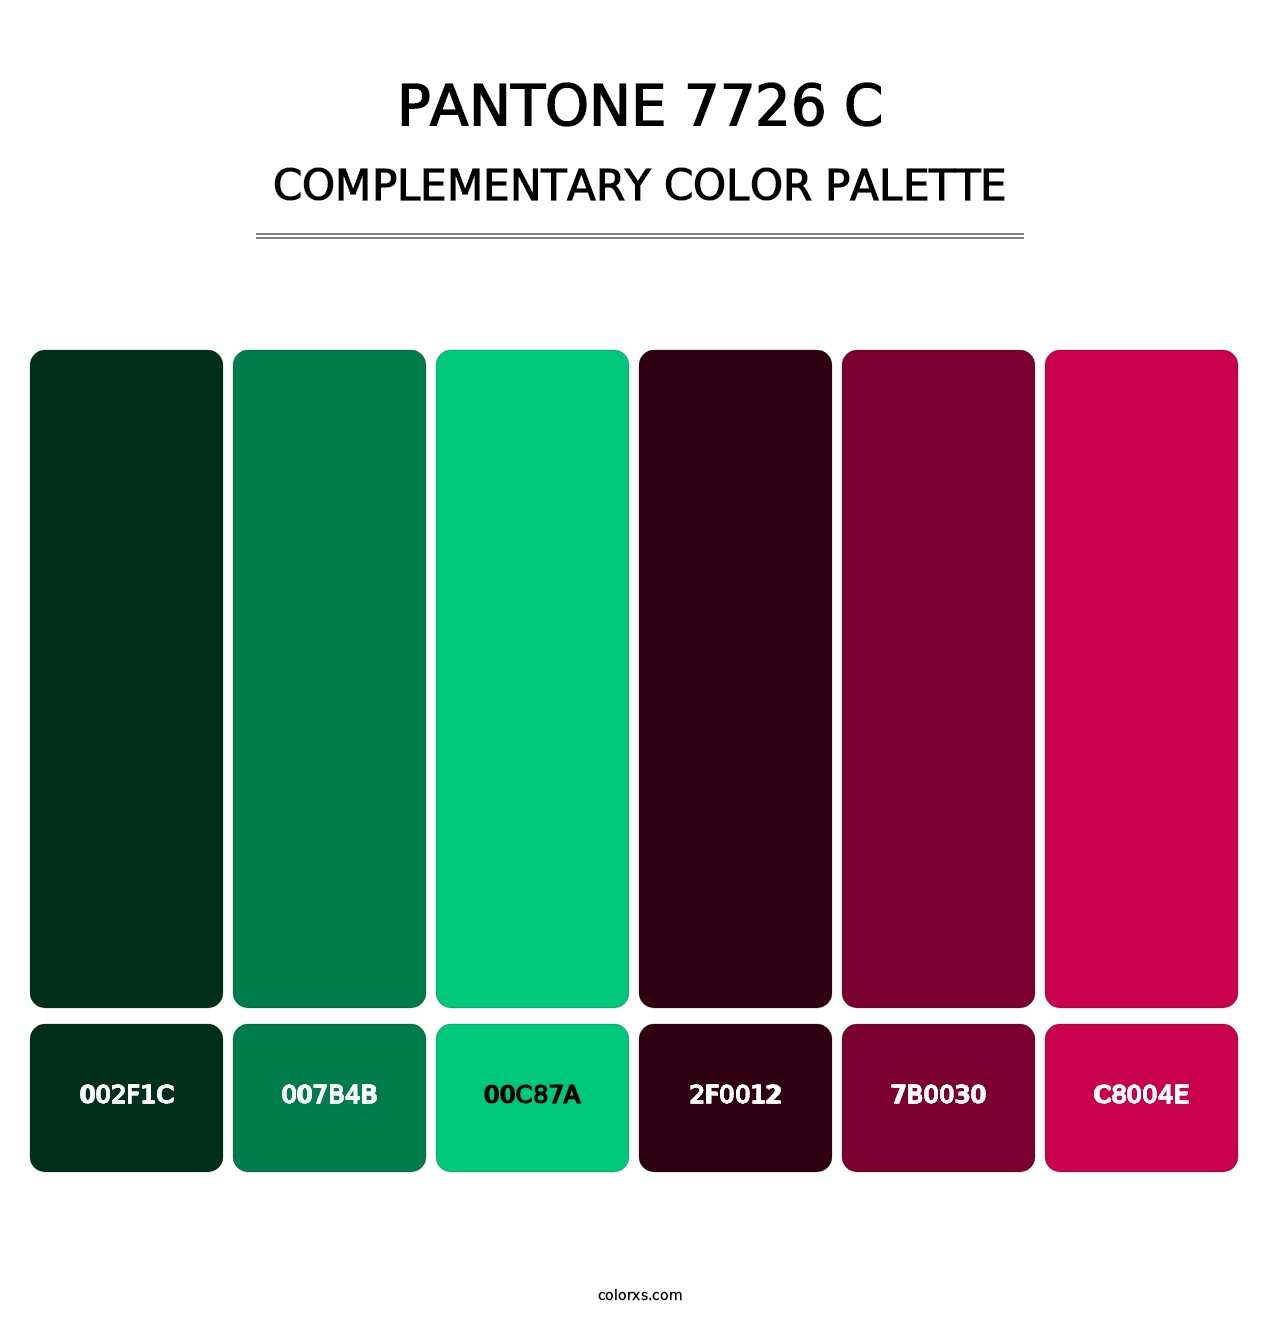 PANTONE 7726 C - Complementary Color Palette